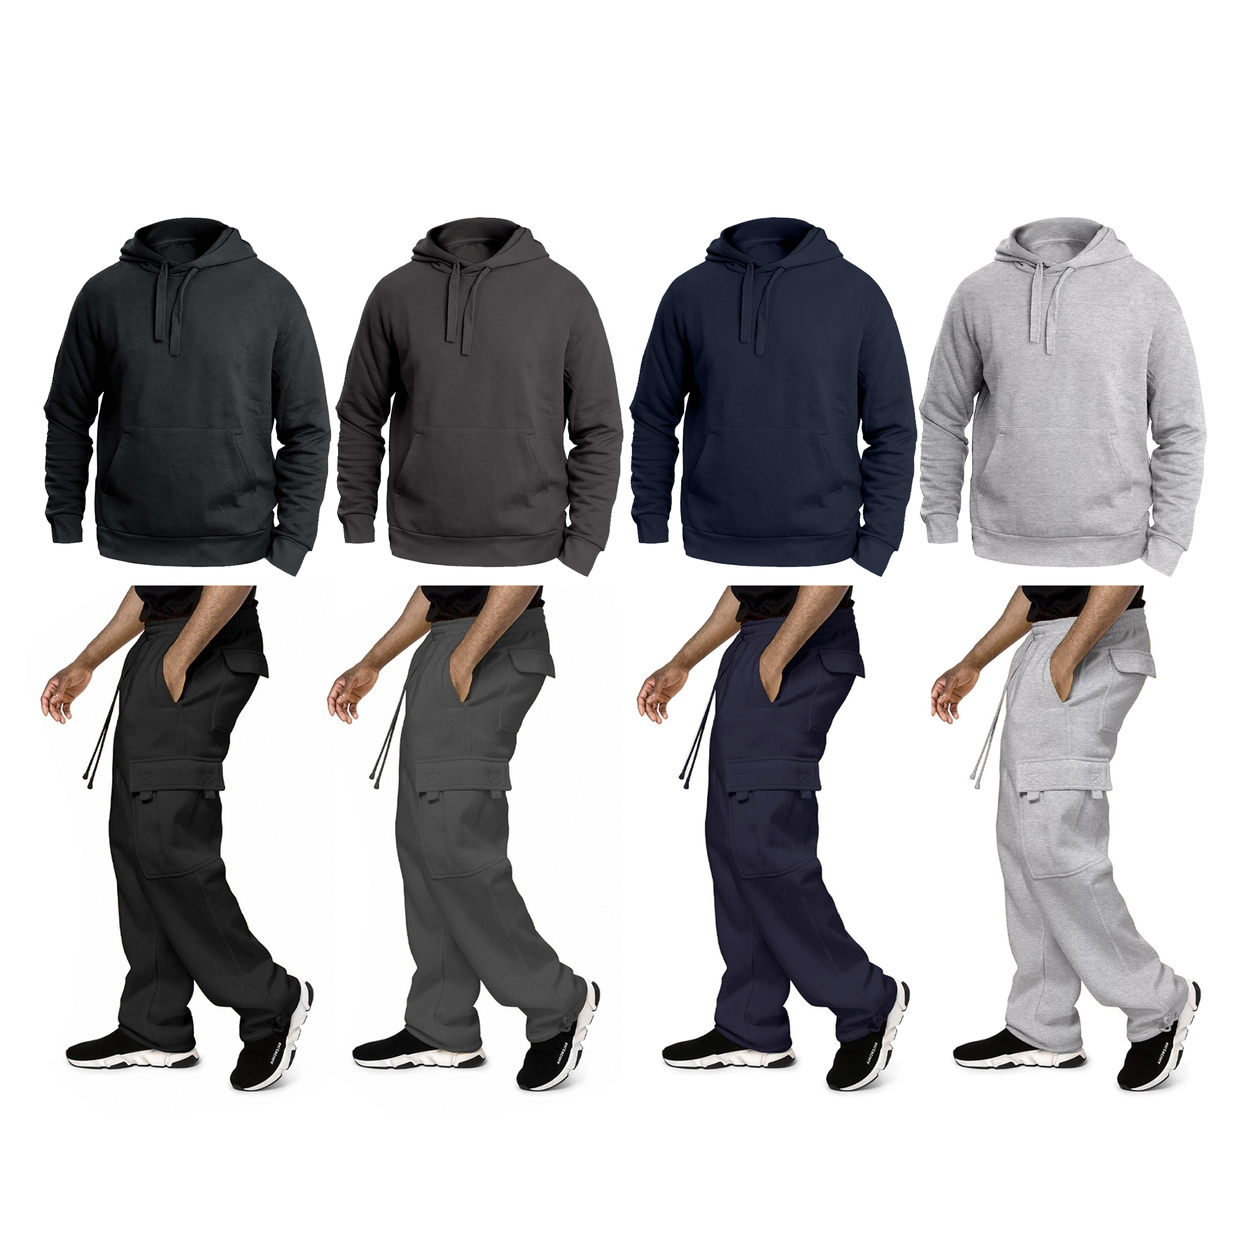 Multi-Pack: Big & Tall Men's Winter Warm Cozy Athletic Fleece Lined Multi-Pocket Cargo Sweatsuit - Navy, 1-pack, Medium